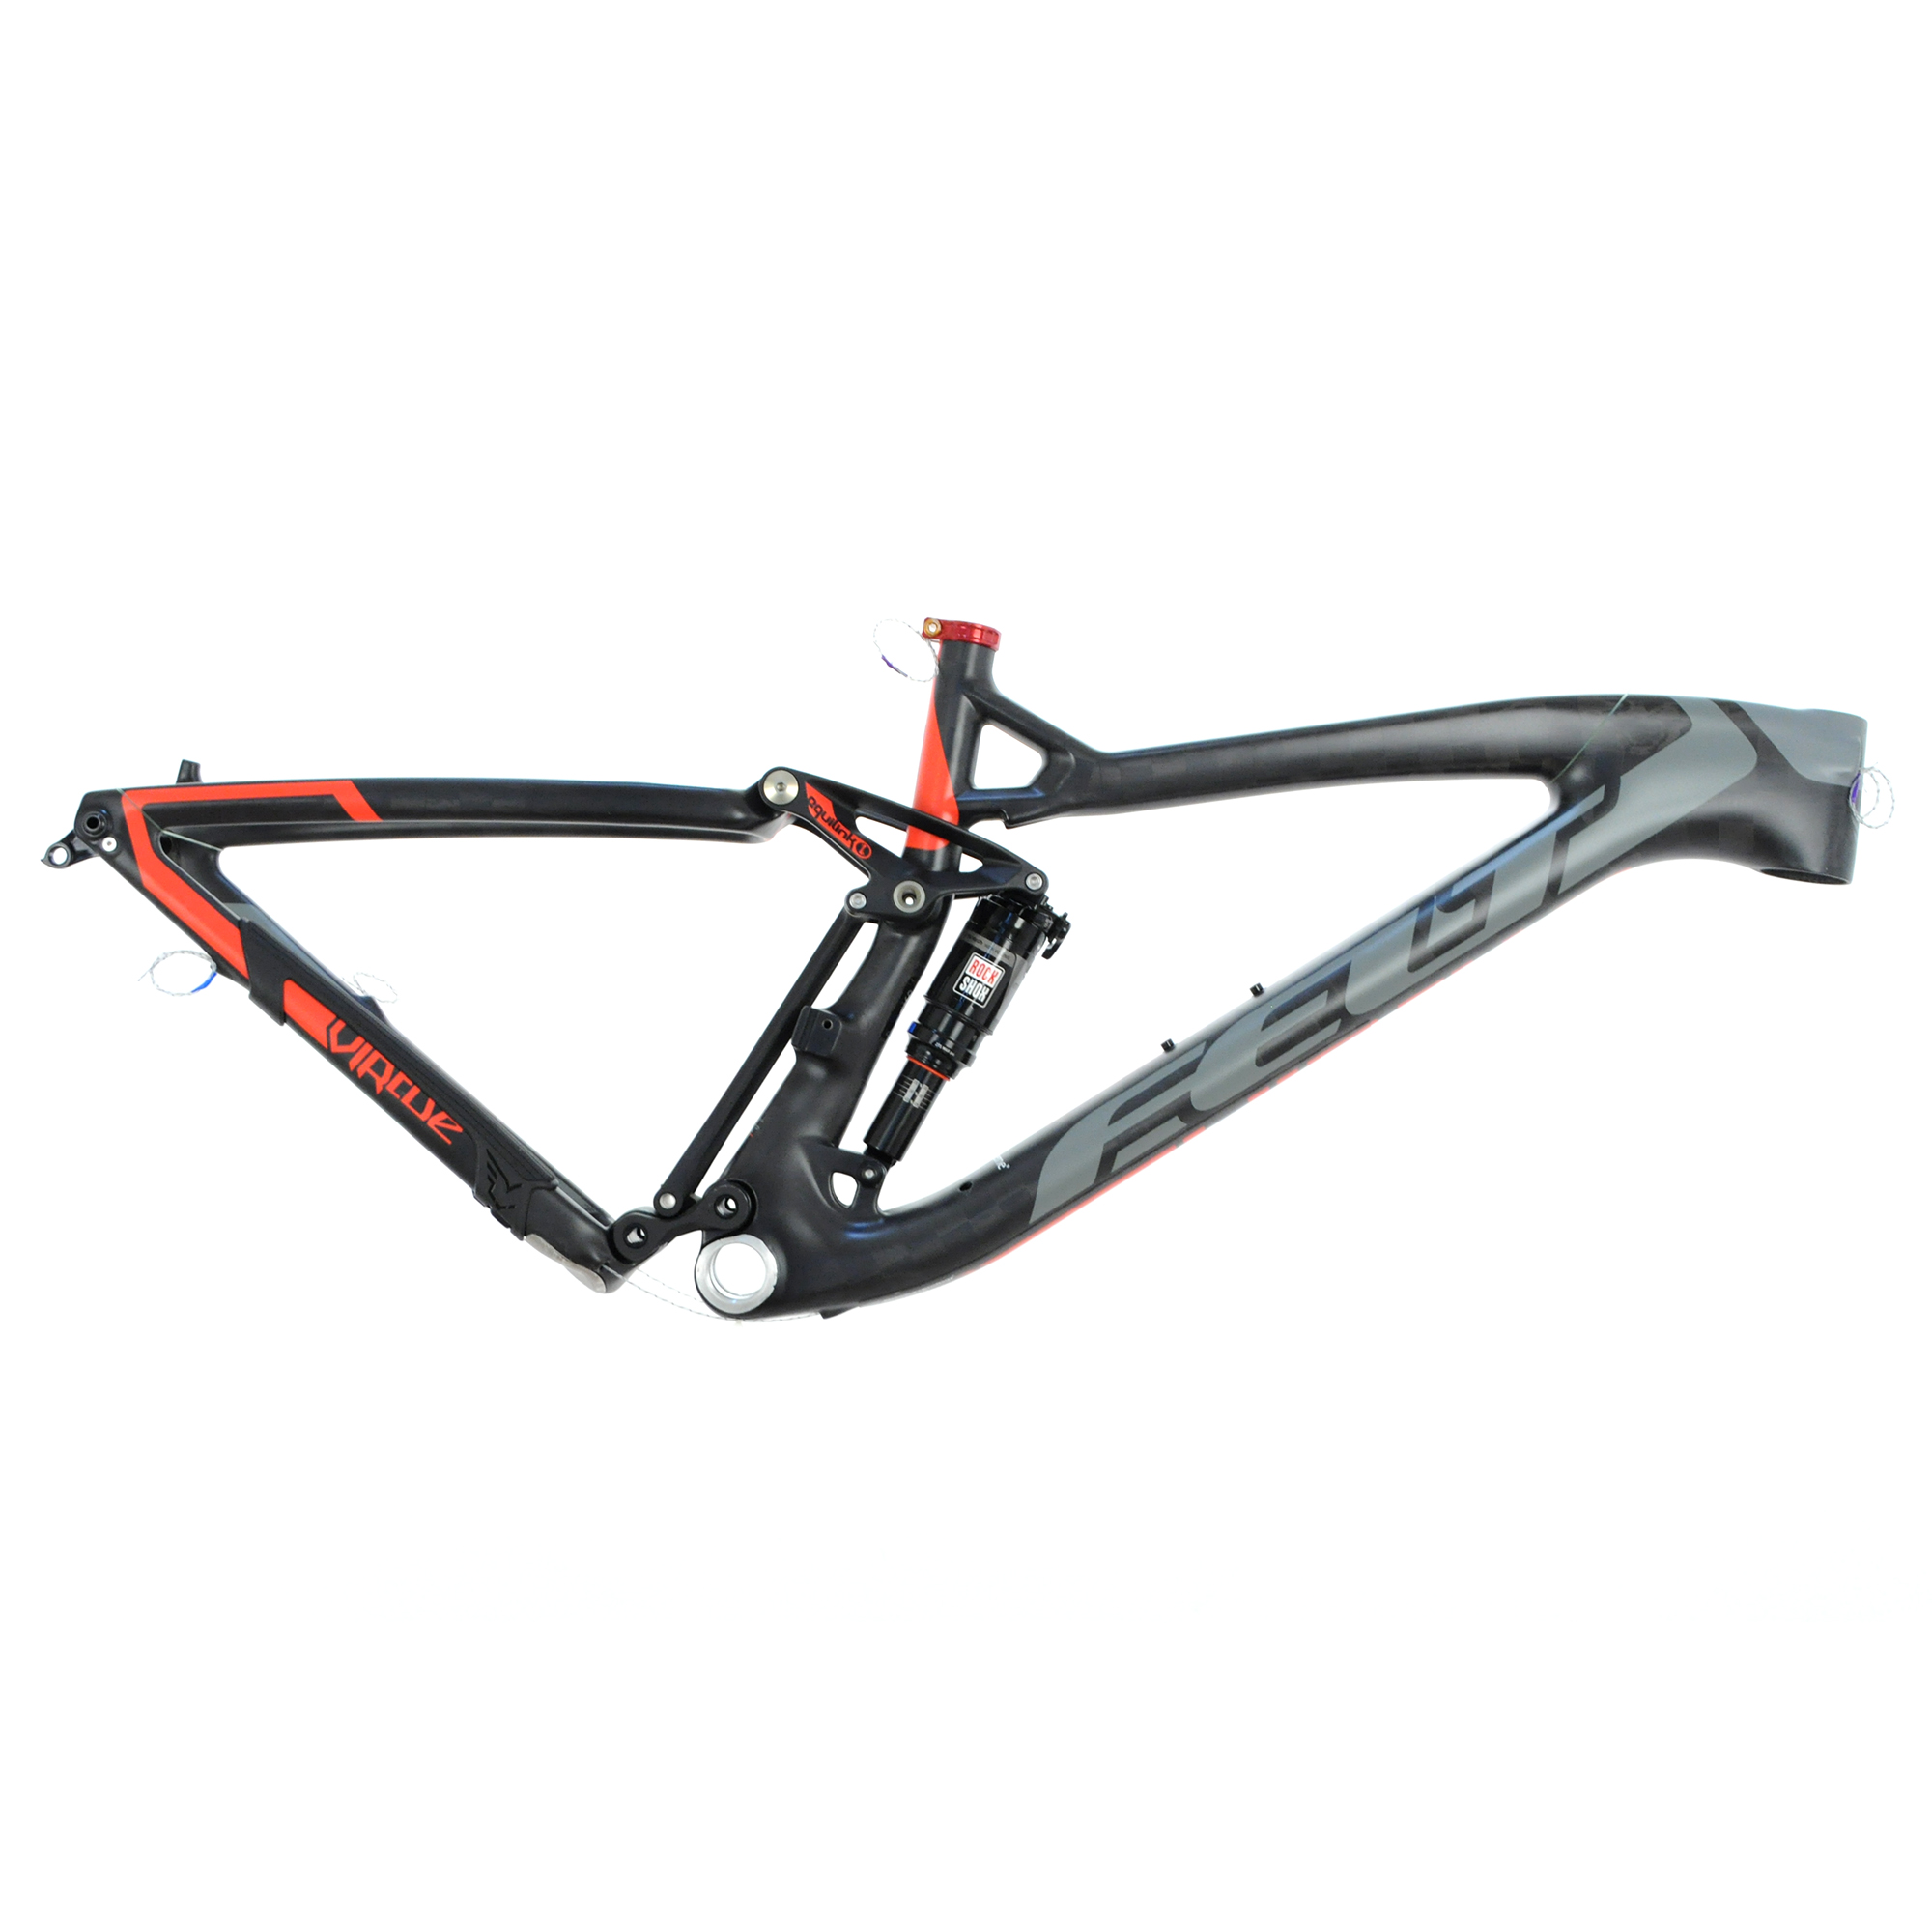 dual suspension mountain bike frame